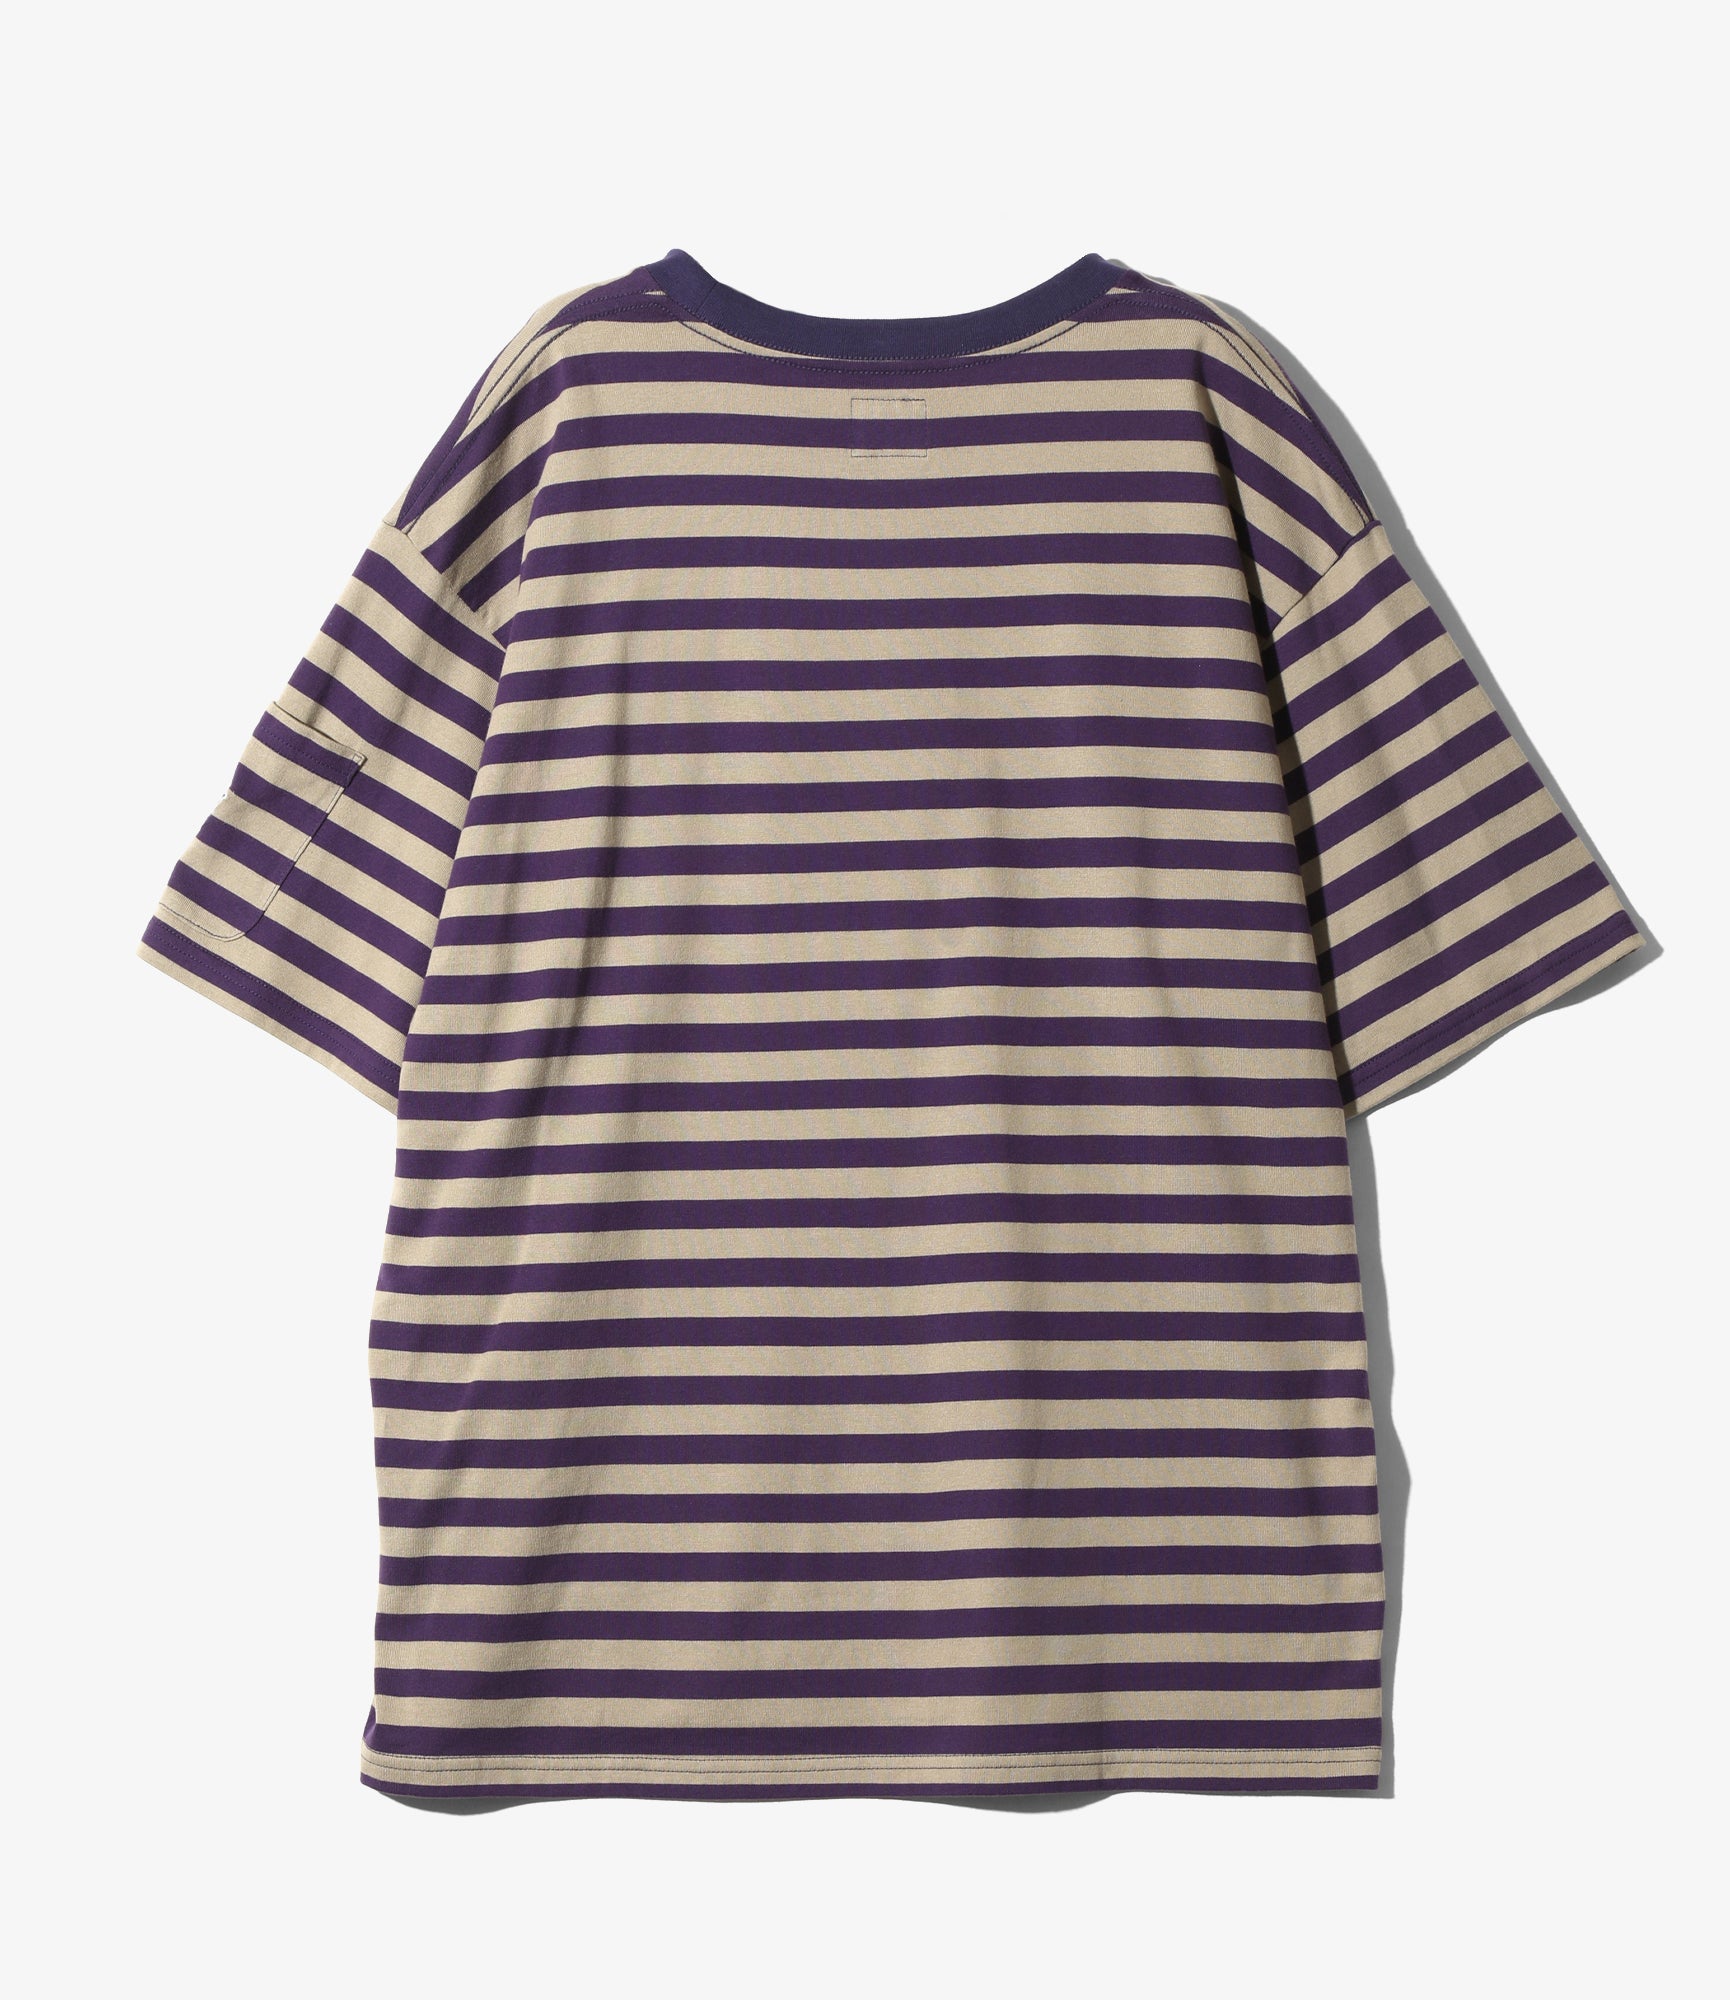 Needles S/S Crew Neck Tee - Cotton Stripe Jersey - Purple/Grey